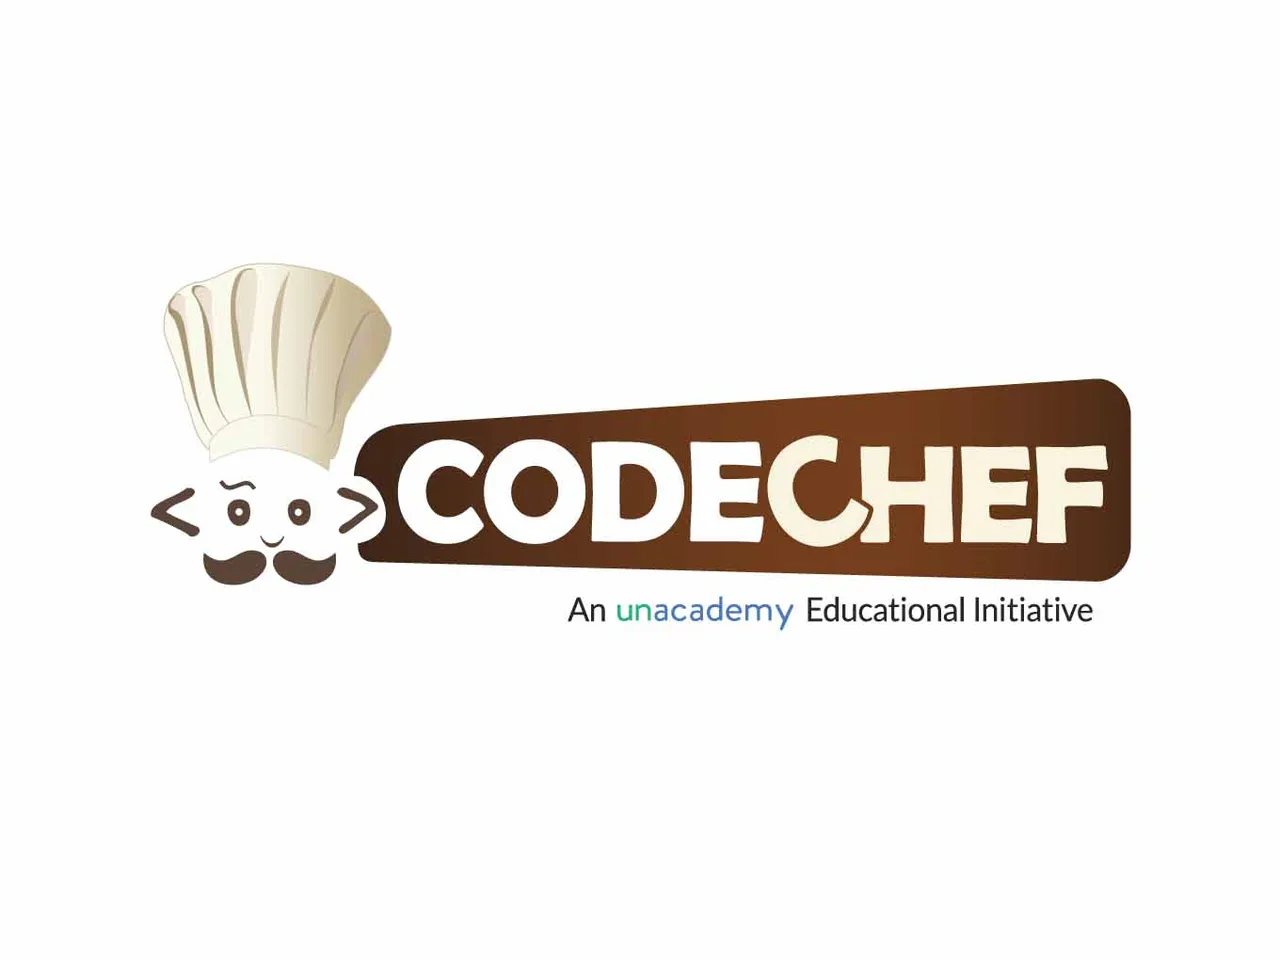 Edtech major Unacademy separates coding platform CodeChef as an independent entity